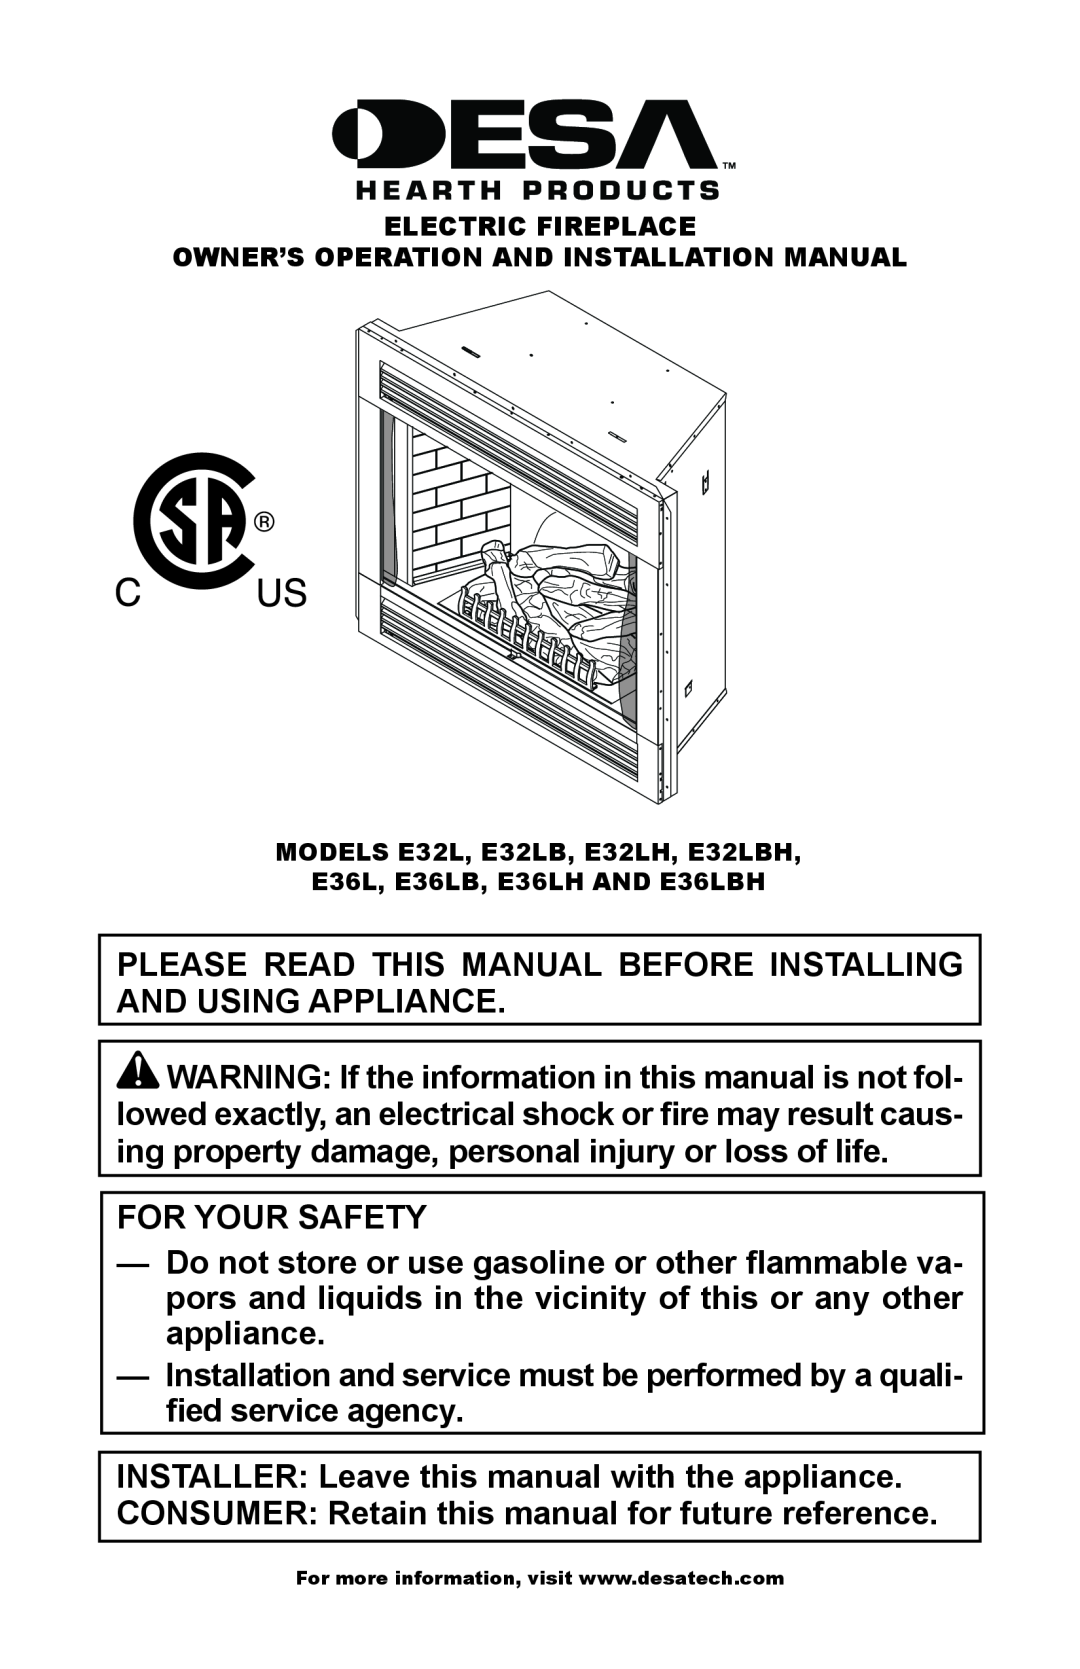 Desa E36LBH, E36LH, E32LH, E32LBH installation manual For Your Safety 